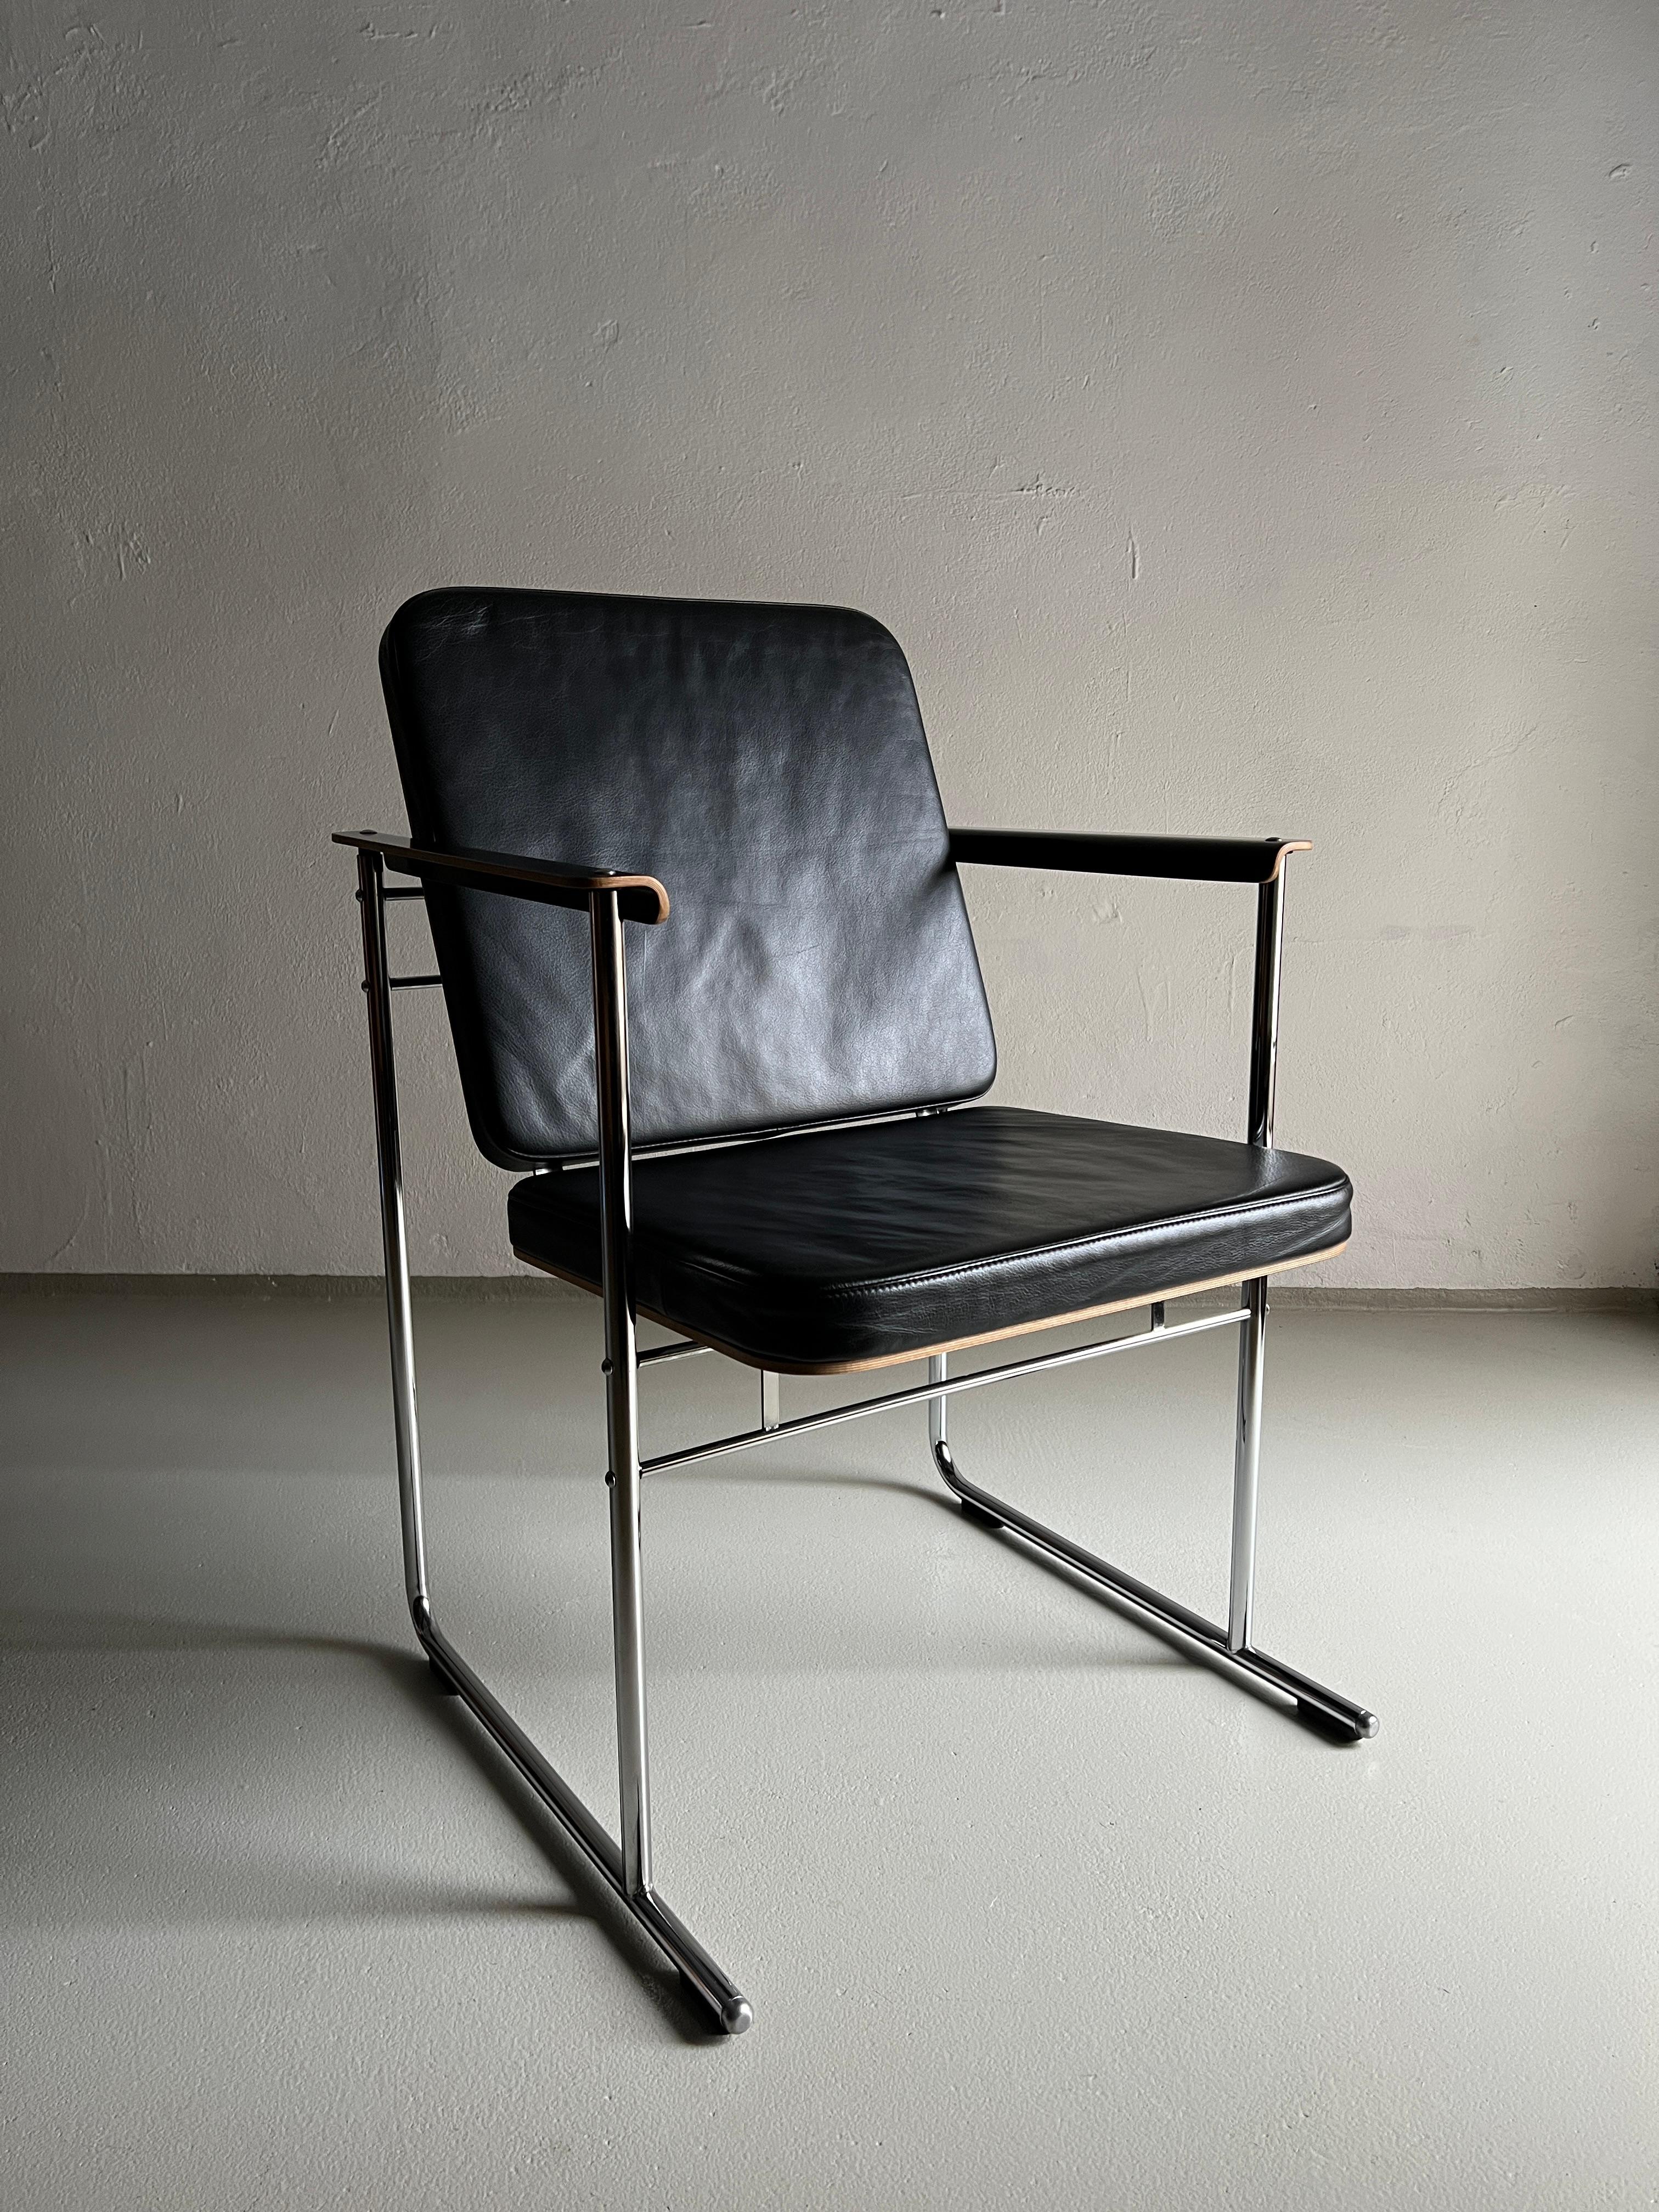 Set of 4 “Skaala” armchairs designed by Yrjö Kukkapuro for Avarte. Laminated birch, chrome-plated tubular steel frame, high-quality black leather upholstery.